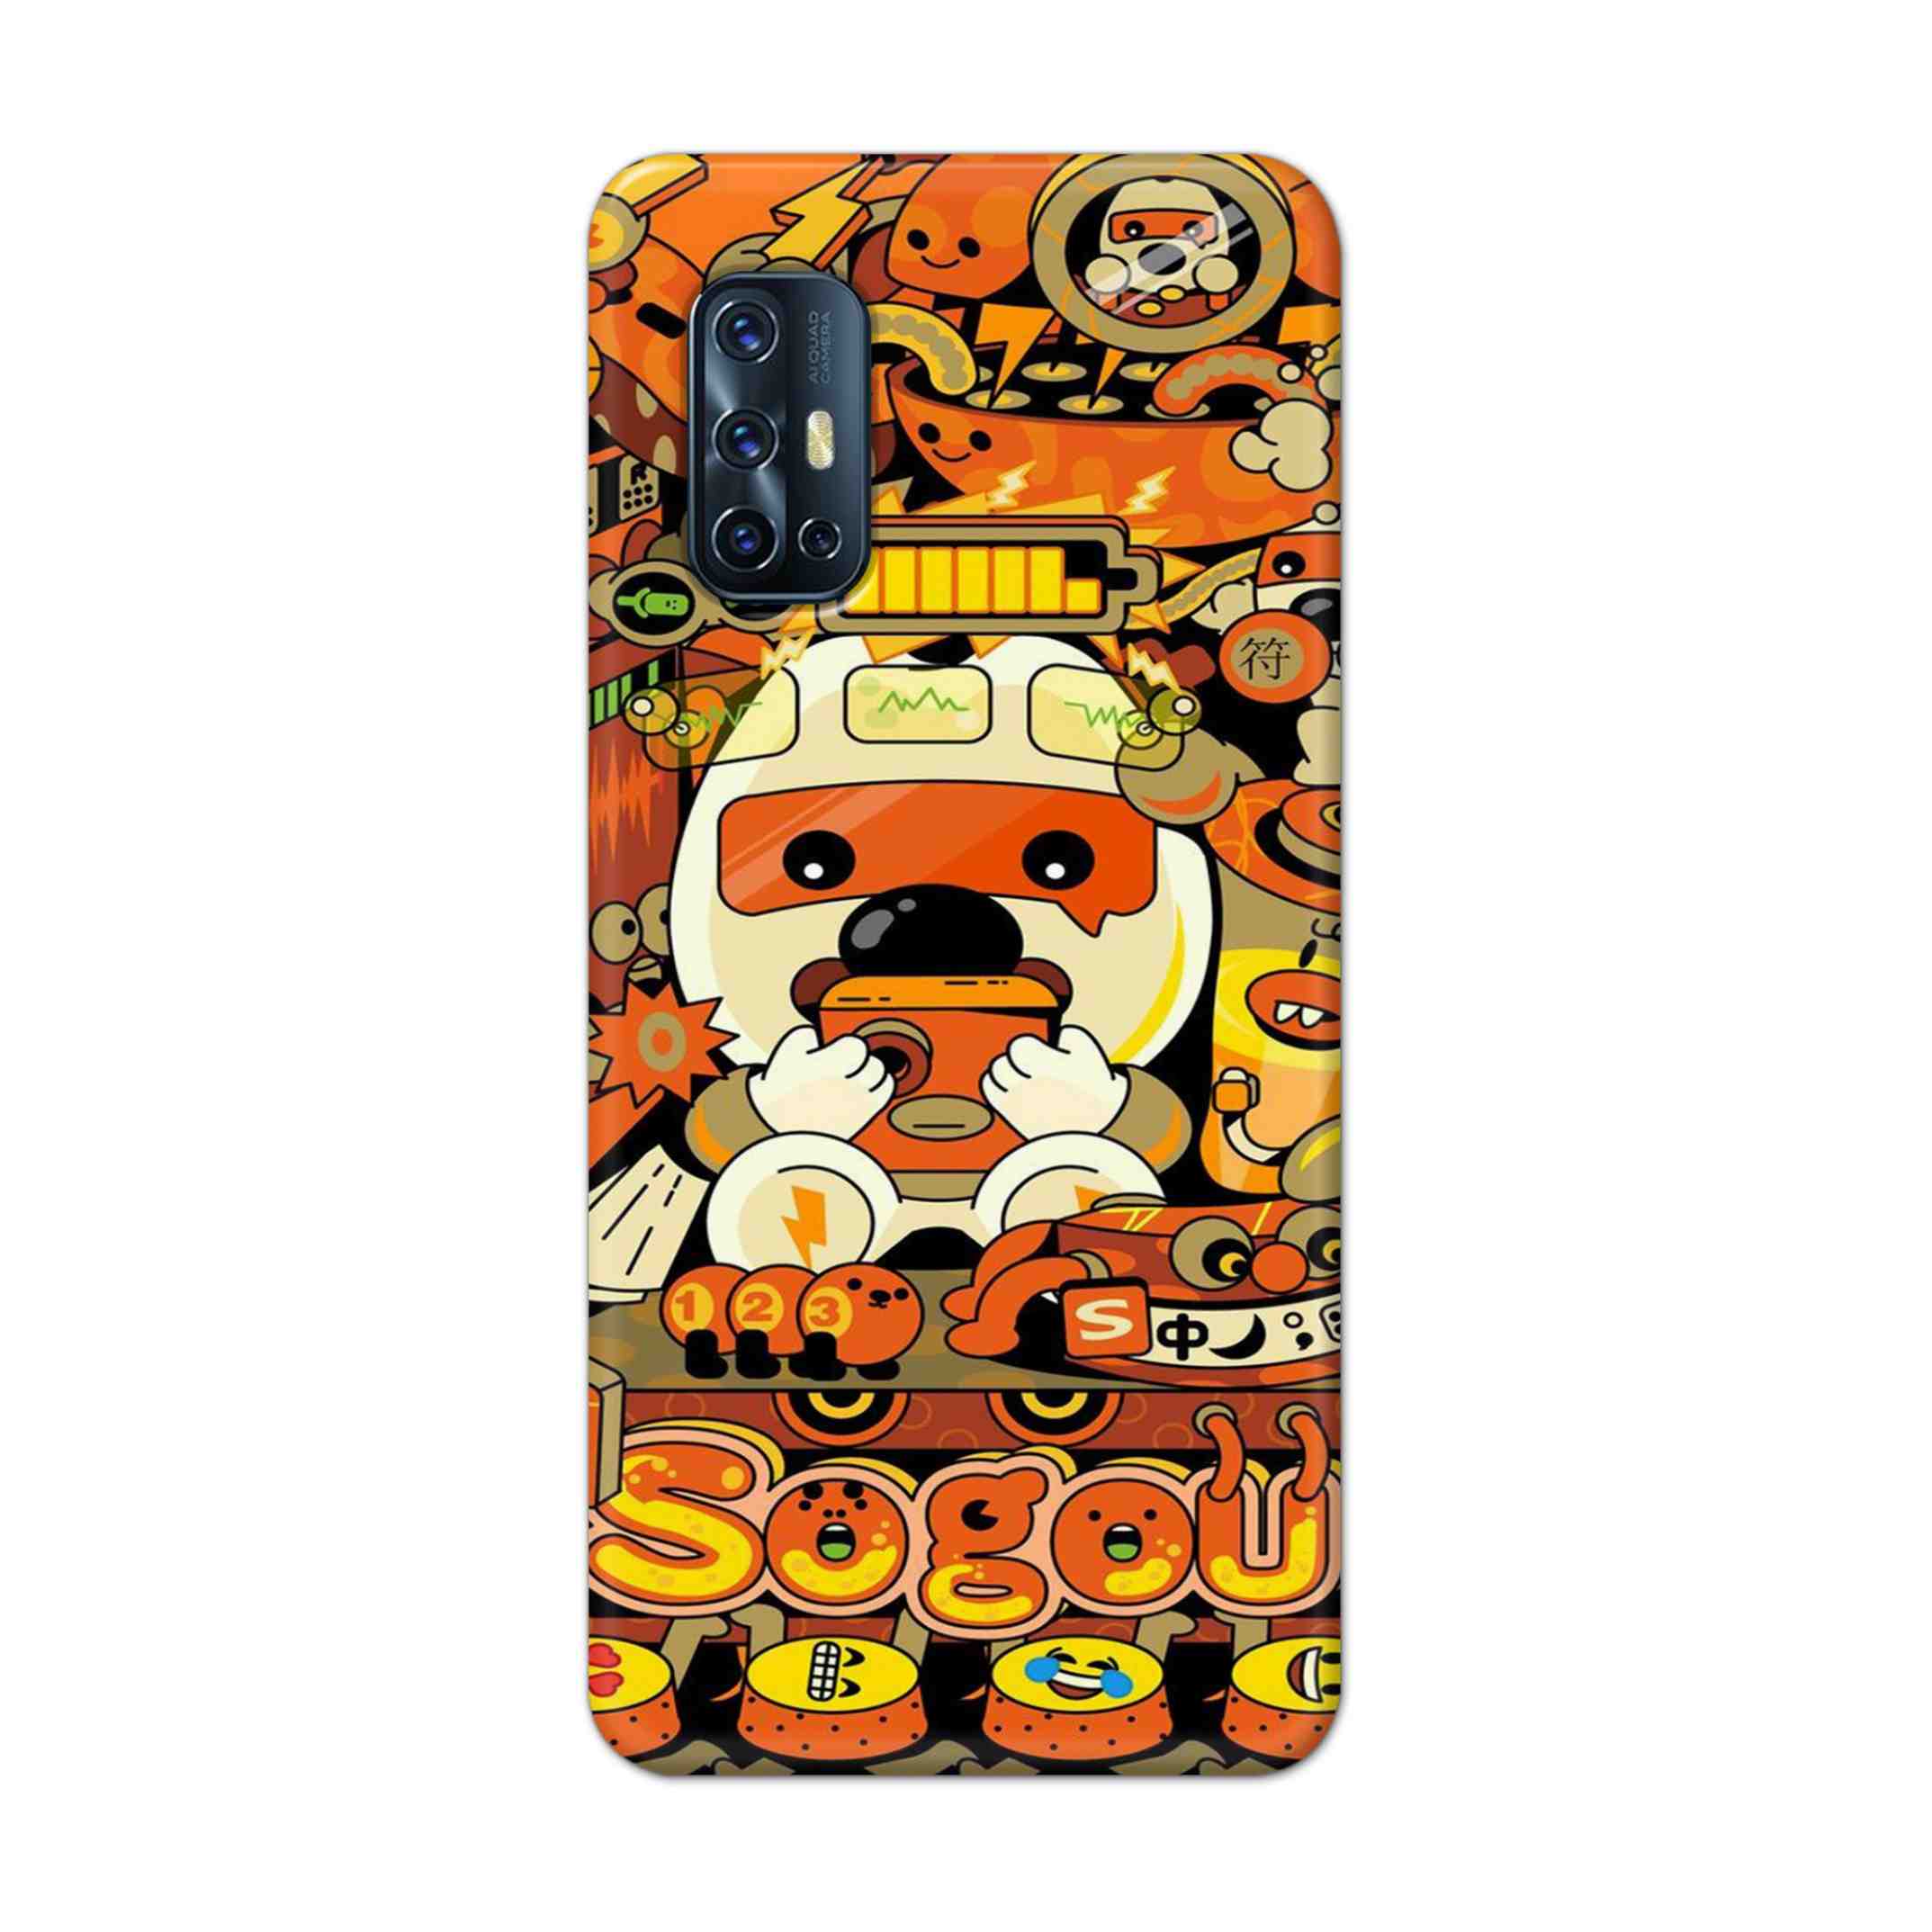 Buy Sogou Hard Back Mobile Phone Case Cover For Vivo V17 Online